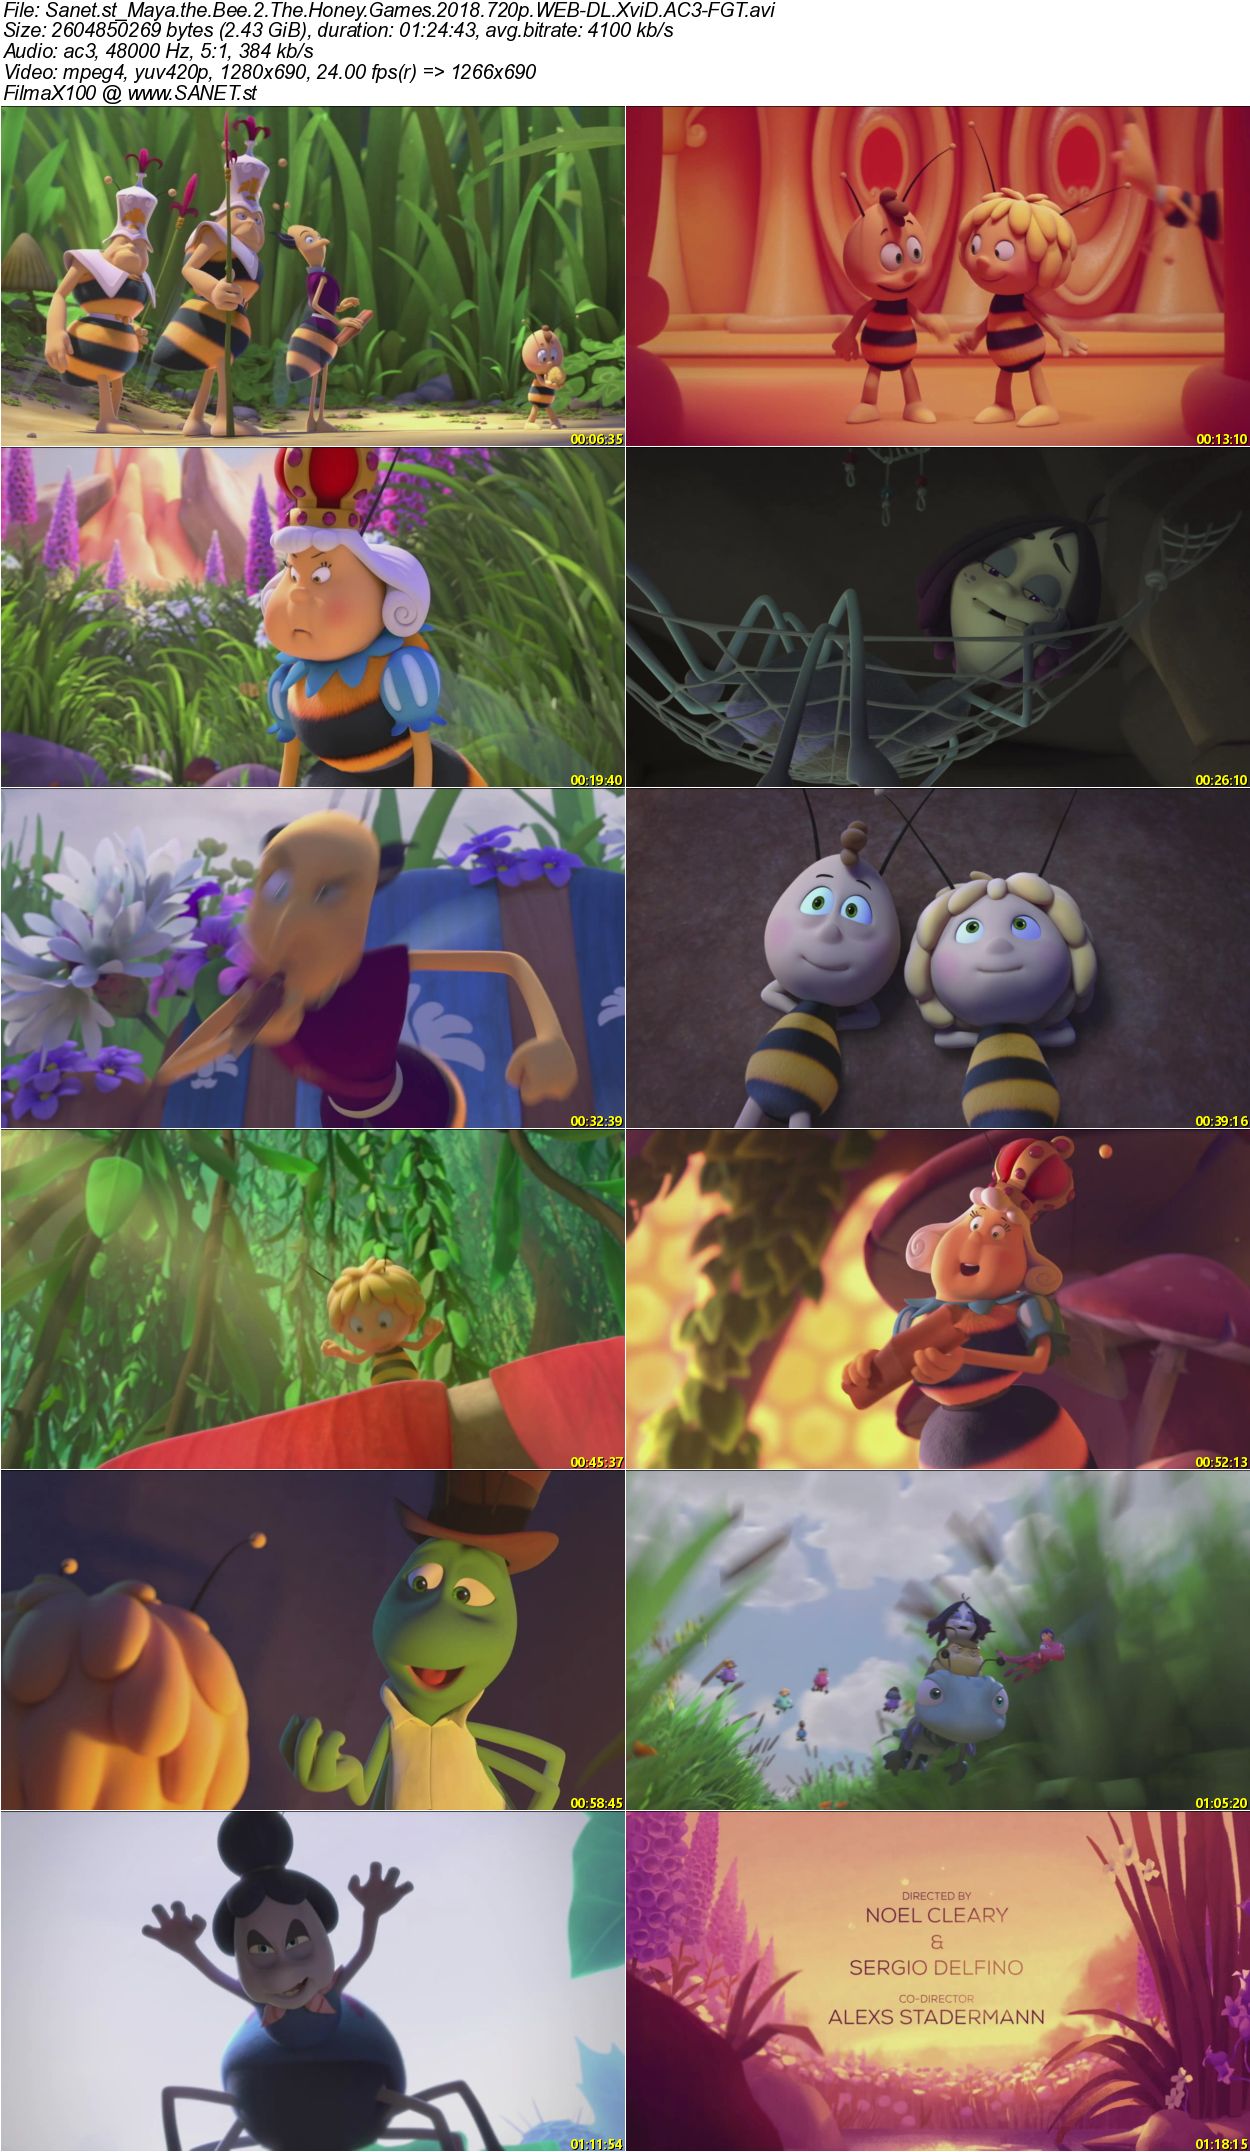 Amazon.com: Maya The Bee 2: The Honey Games: Coco Jack ...